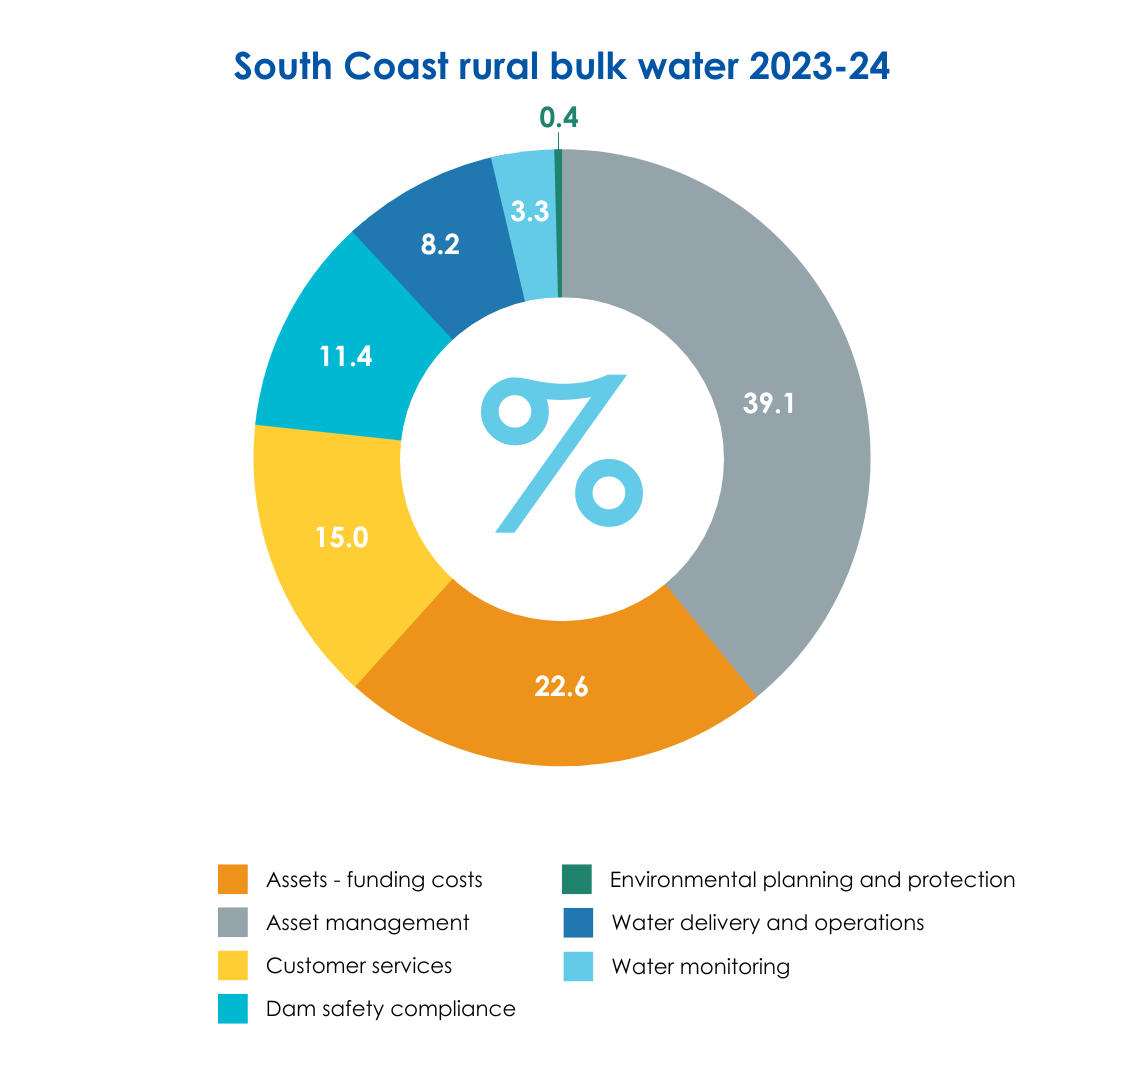 South coast rural bulk water 2023-24